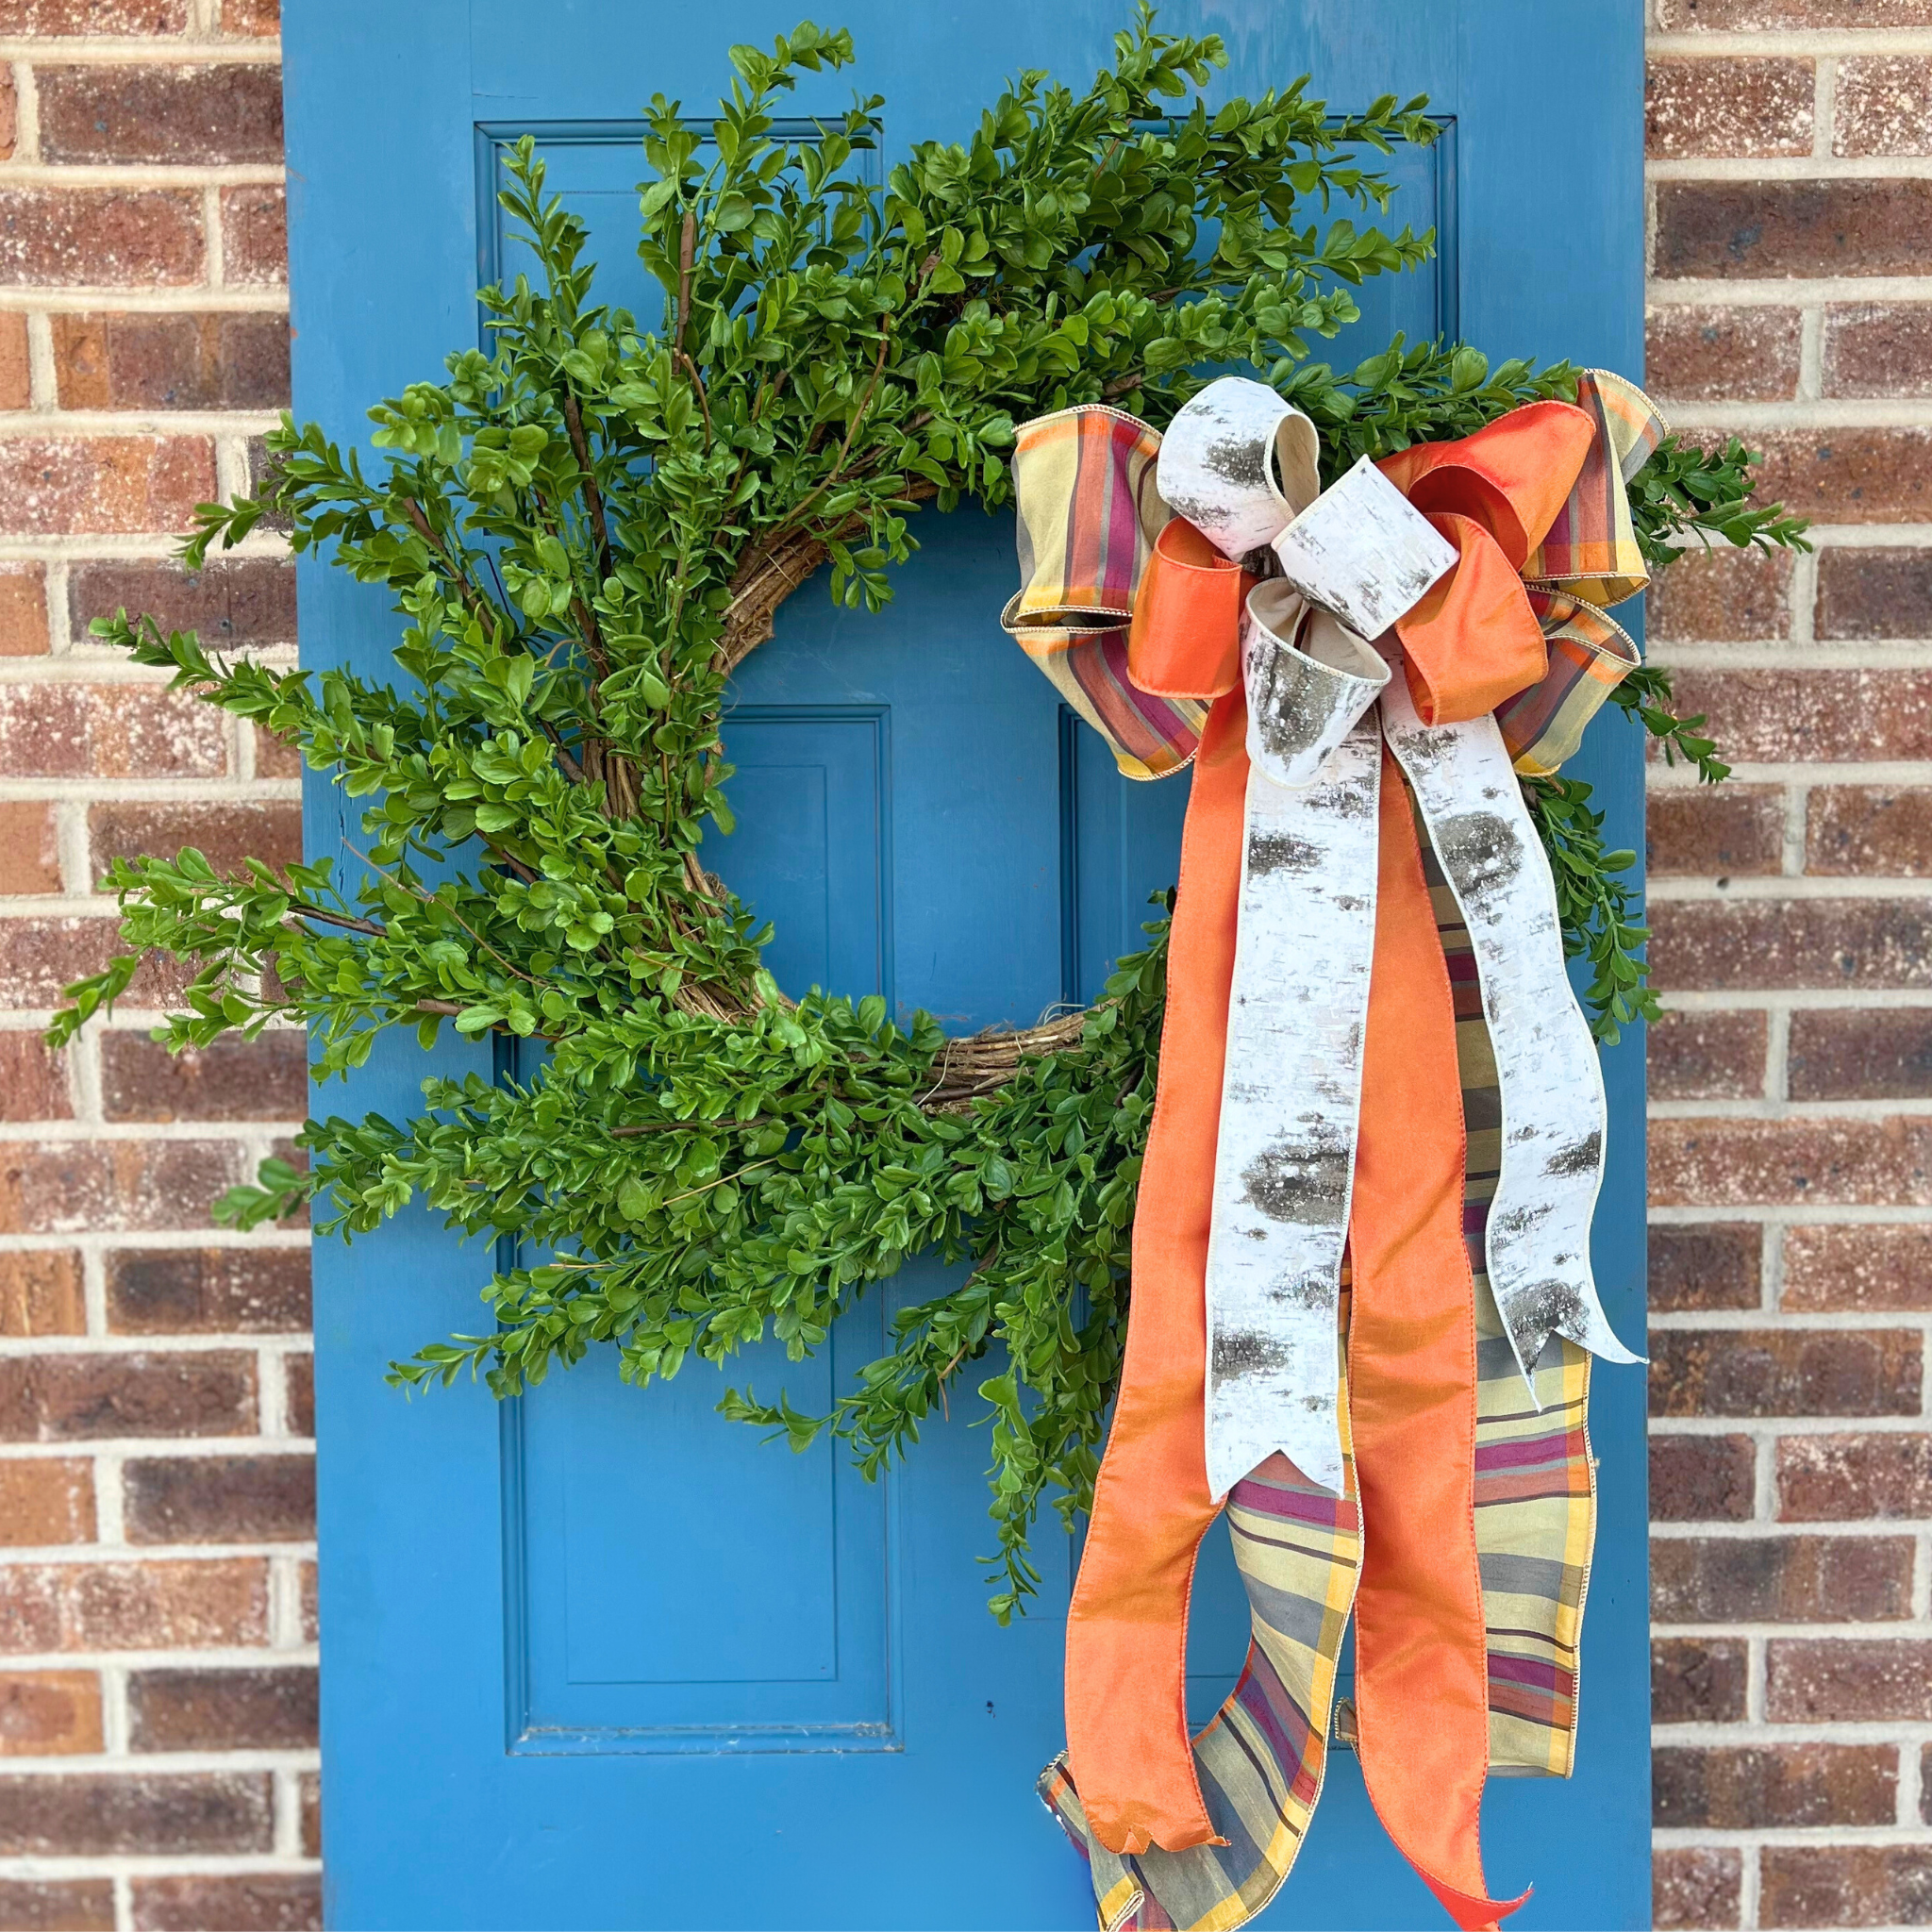 Boxwood Wreath, 22 Inches, Mardel